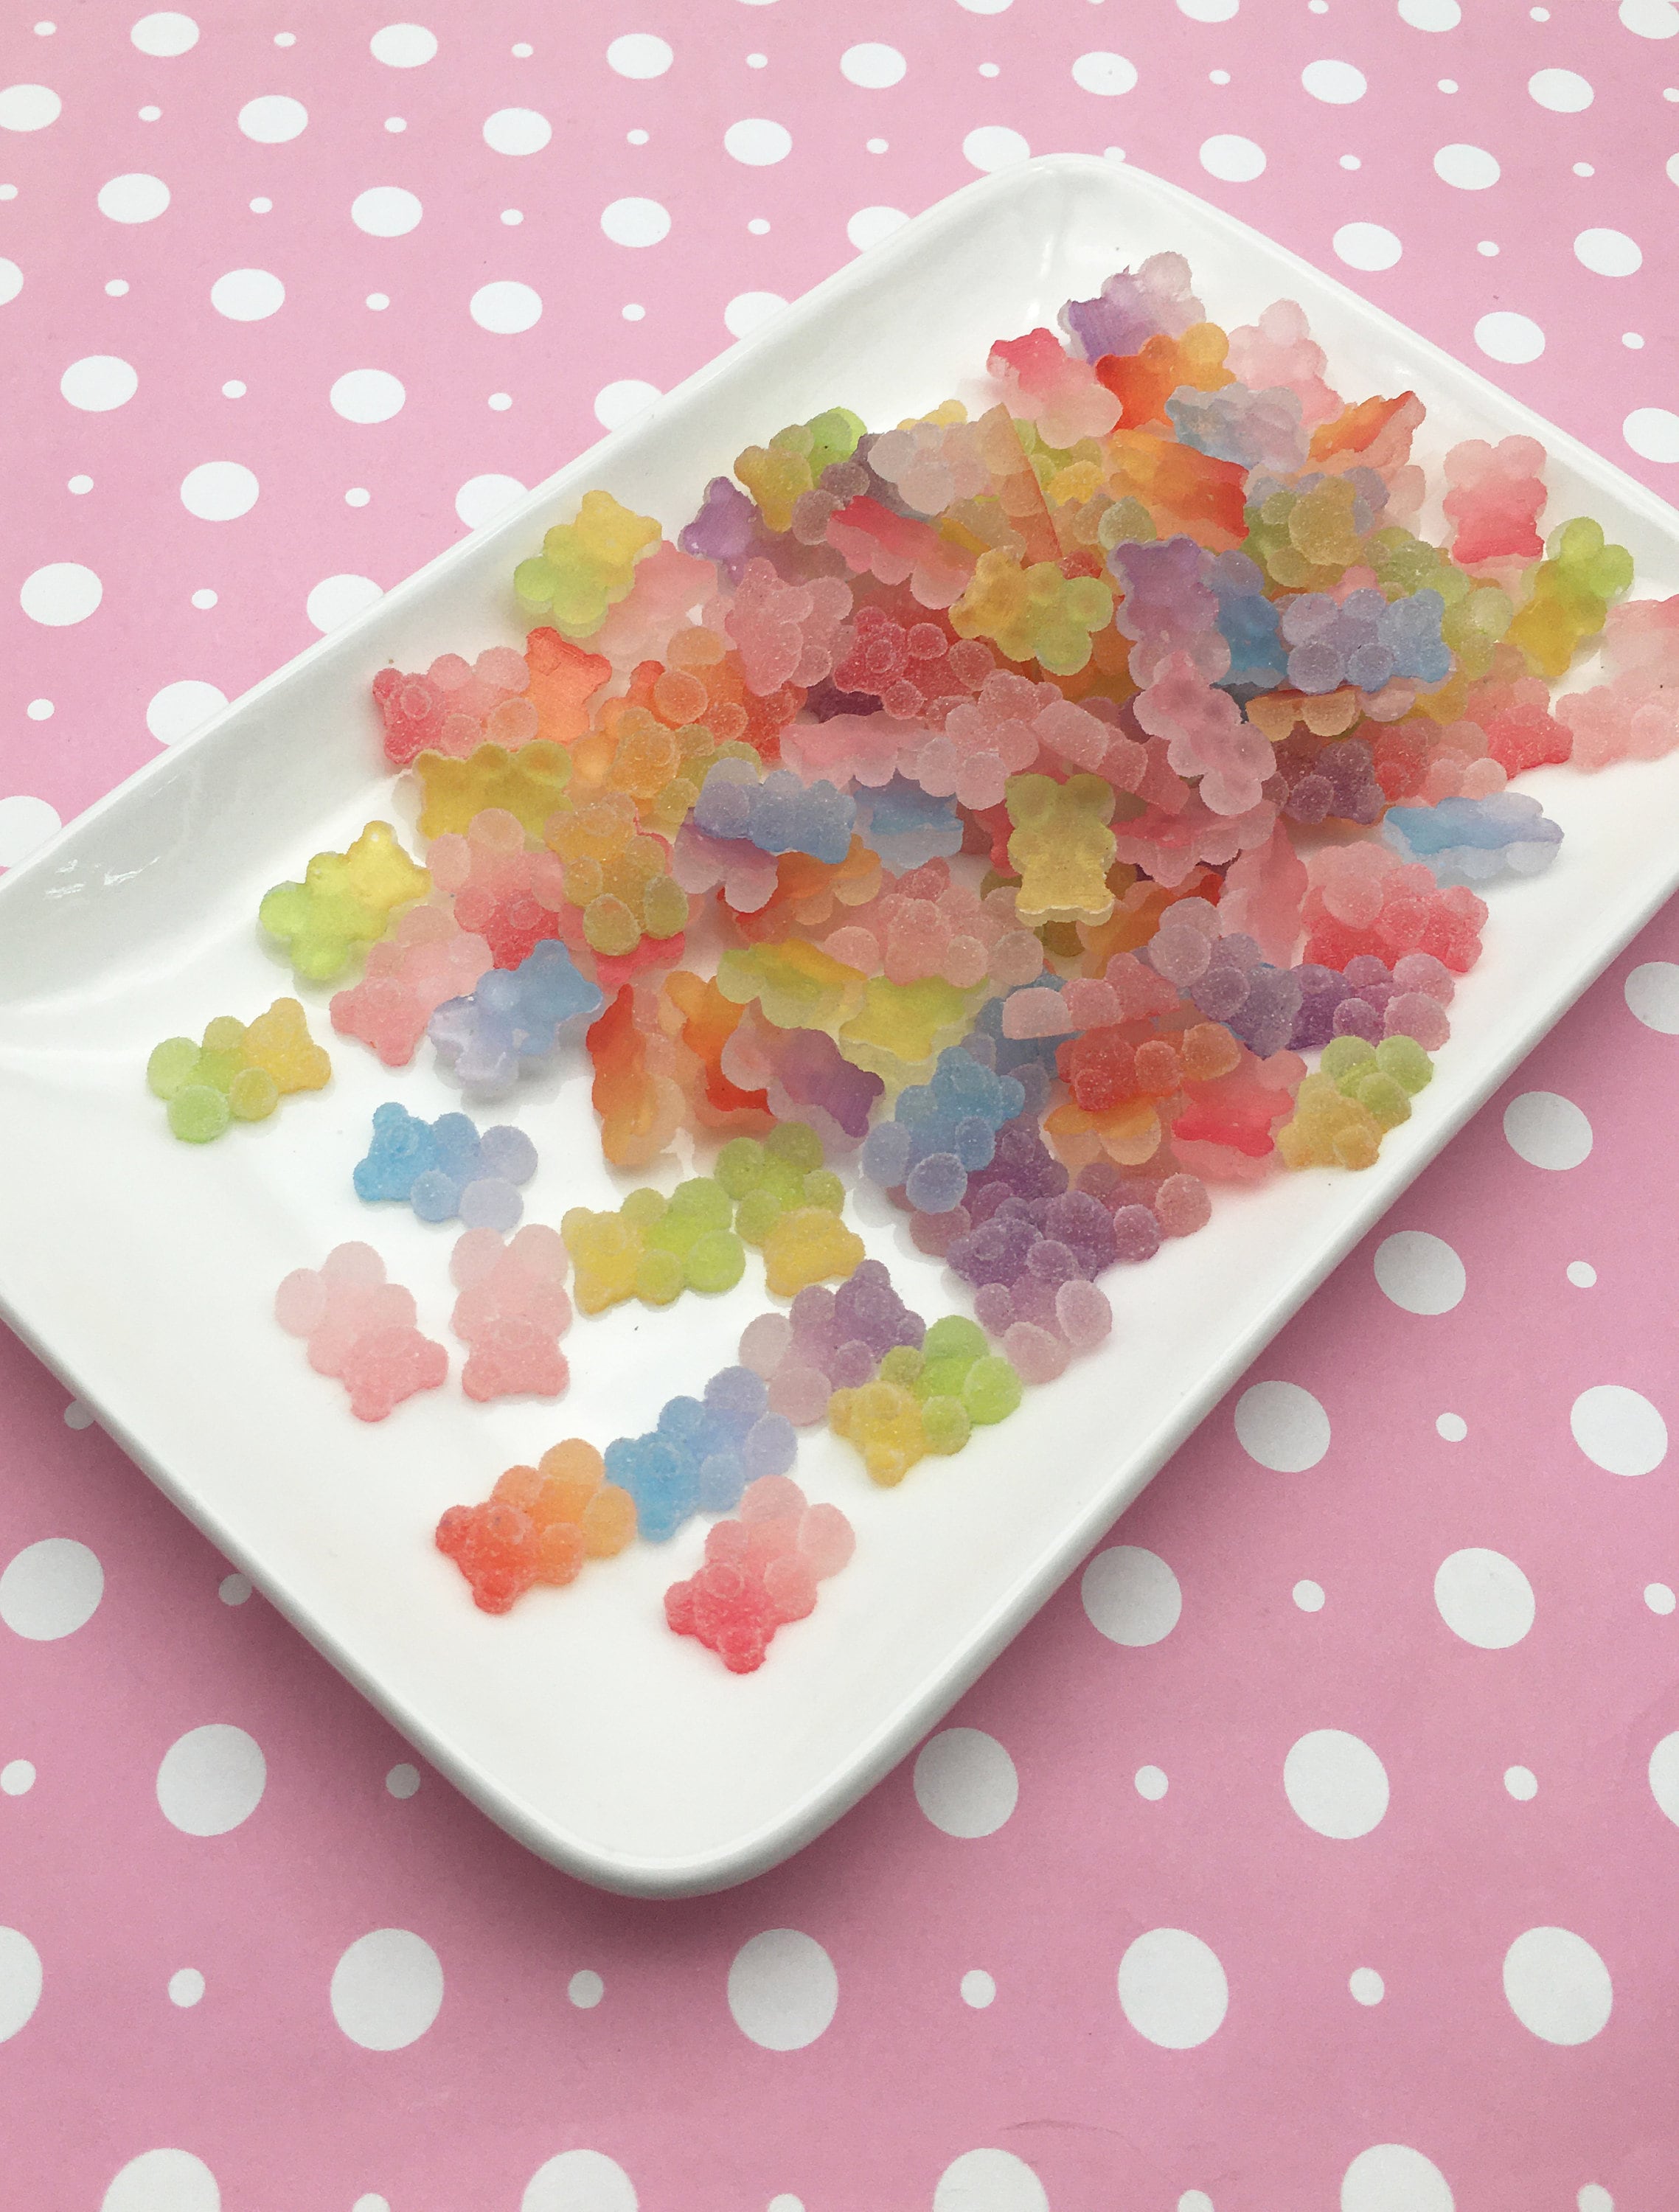 30PC Kawaii Resin Nail Art Charm Jelly Gummy Bear/ Lollipop Mix